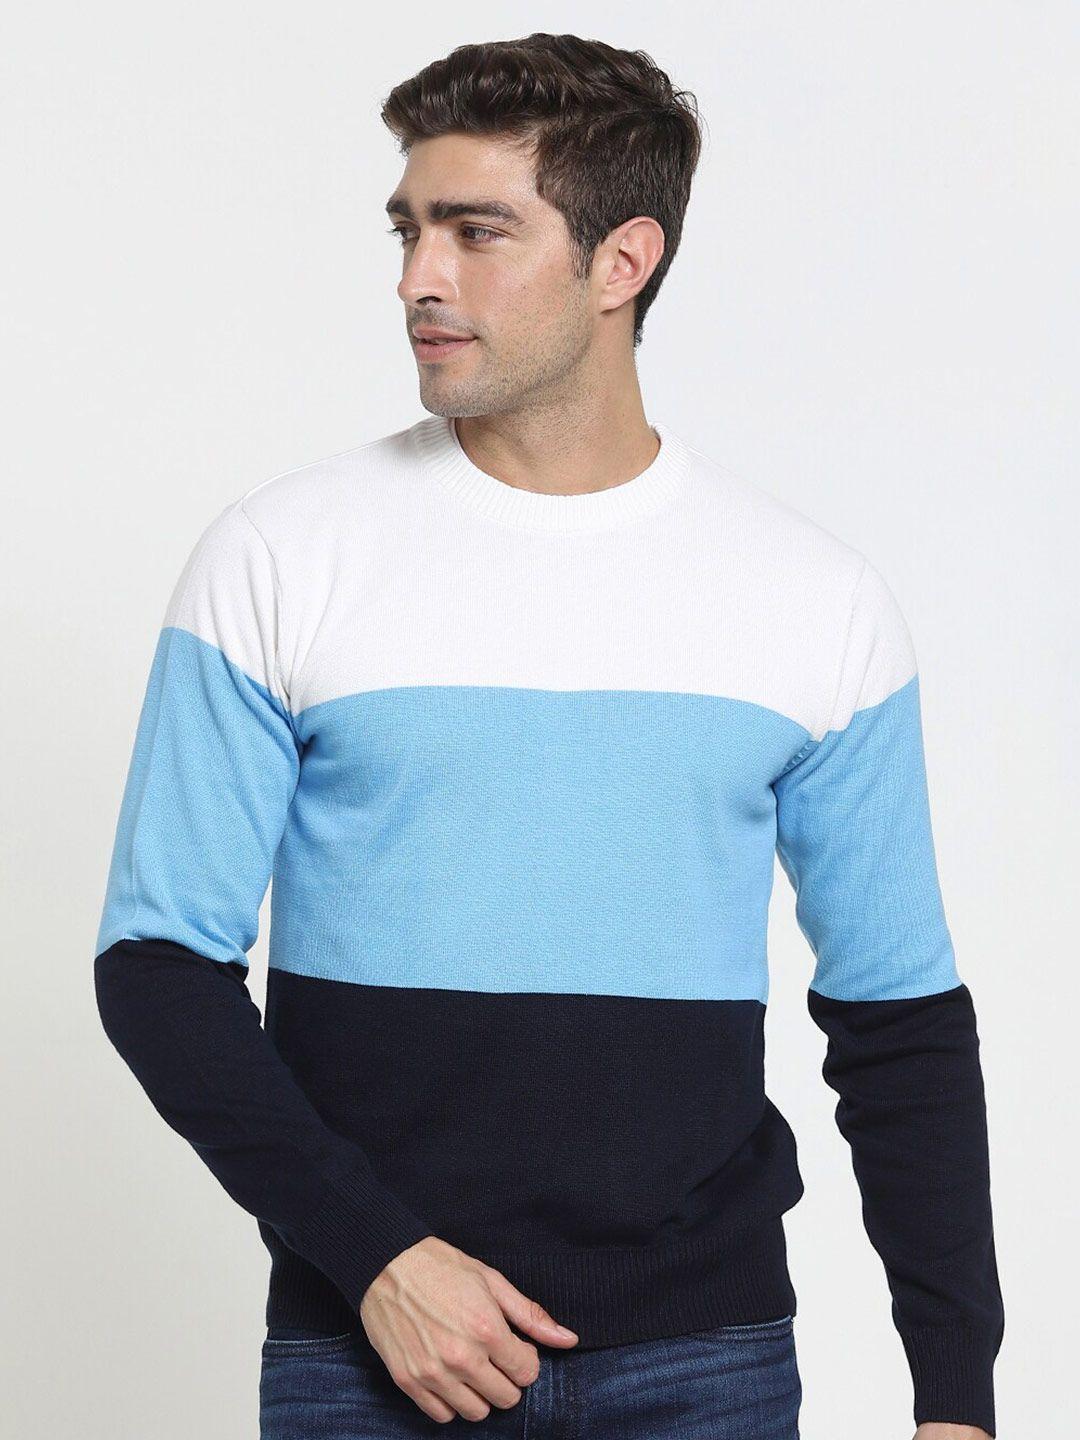 bewakoof-men-blue-&-white-colourblocked-windsurfer-pullover-sweater